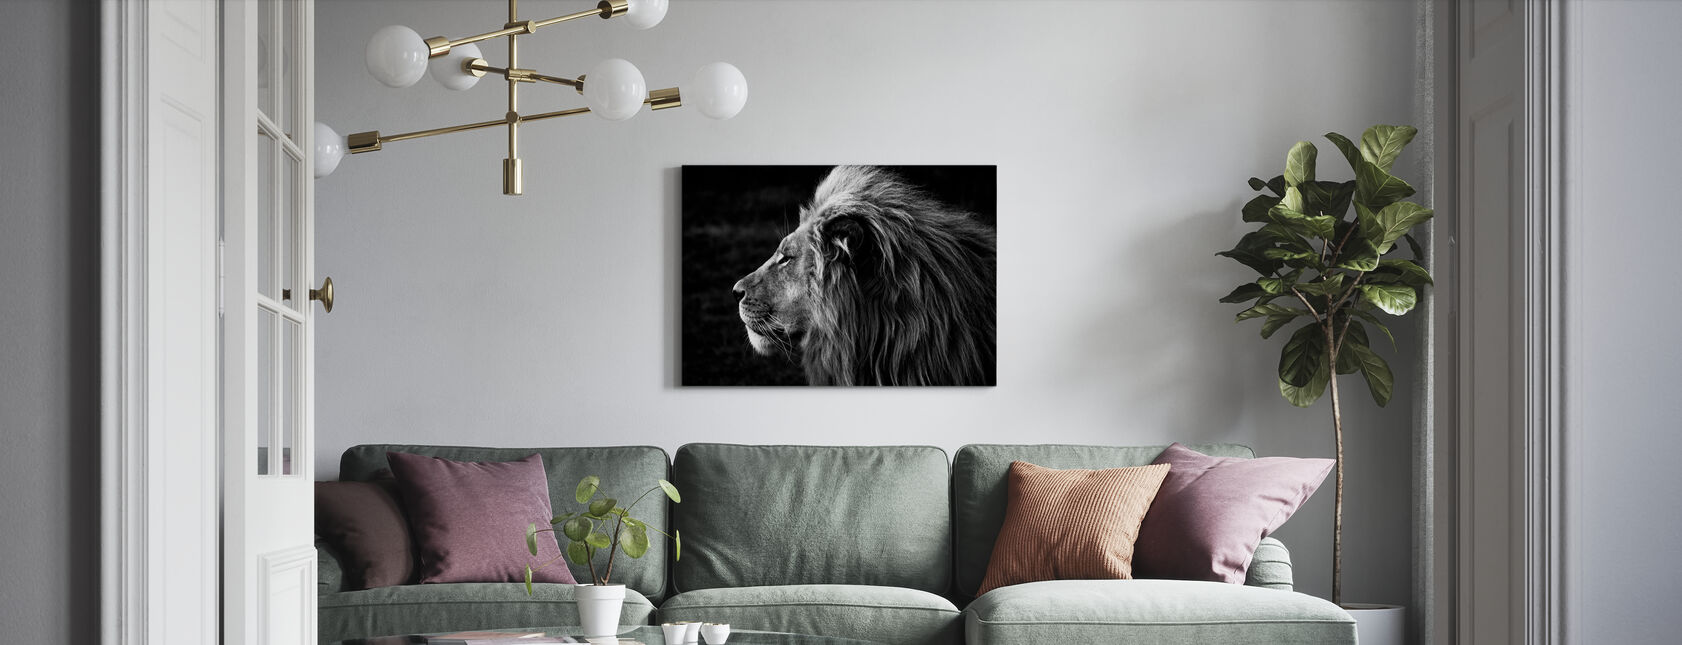 Lion - Canvas print - Living Room